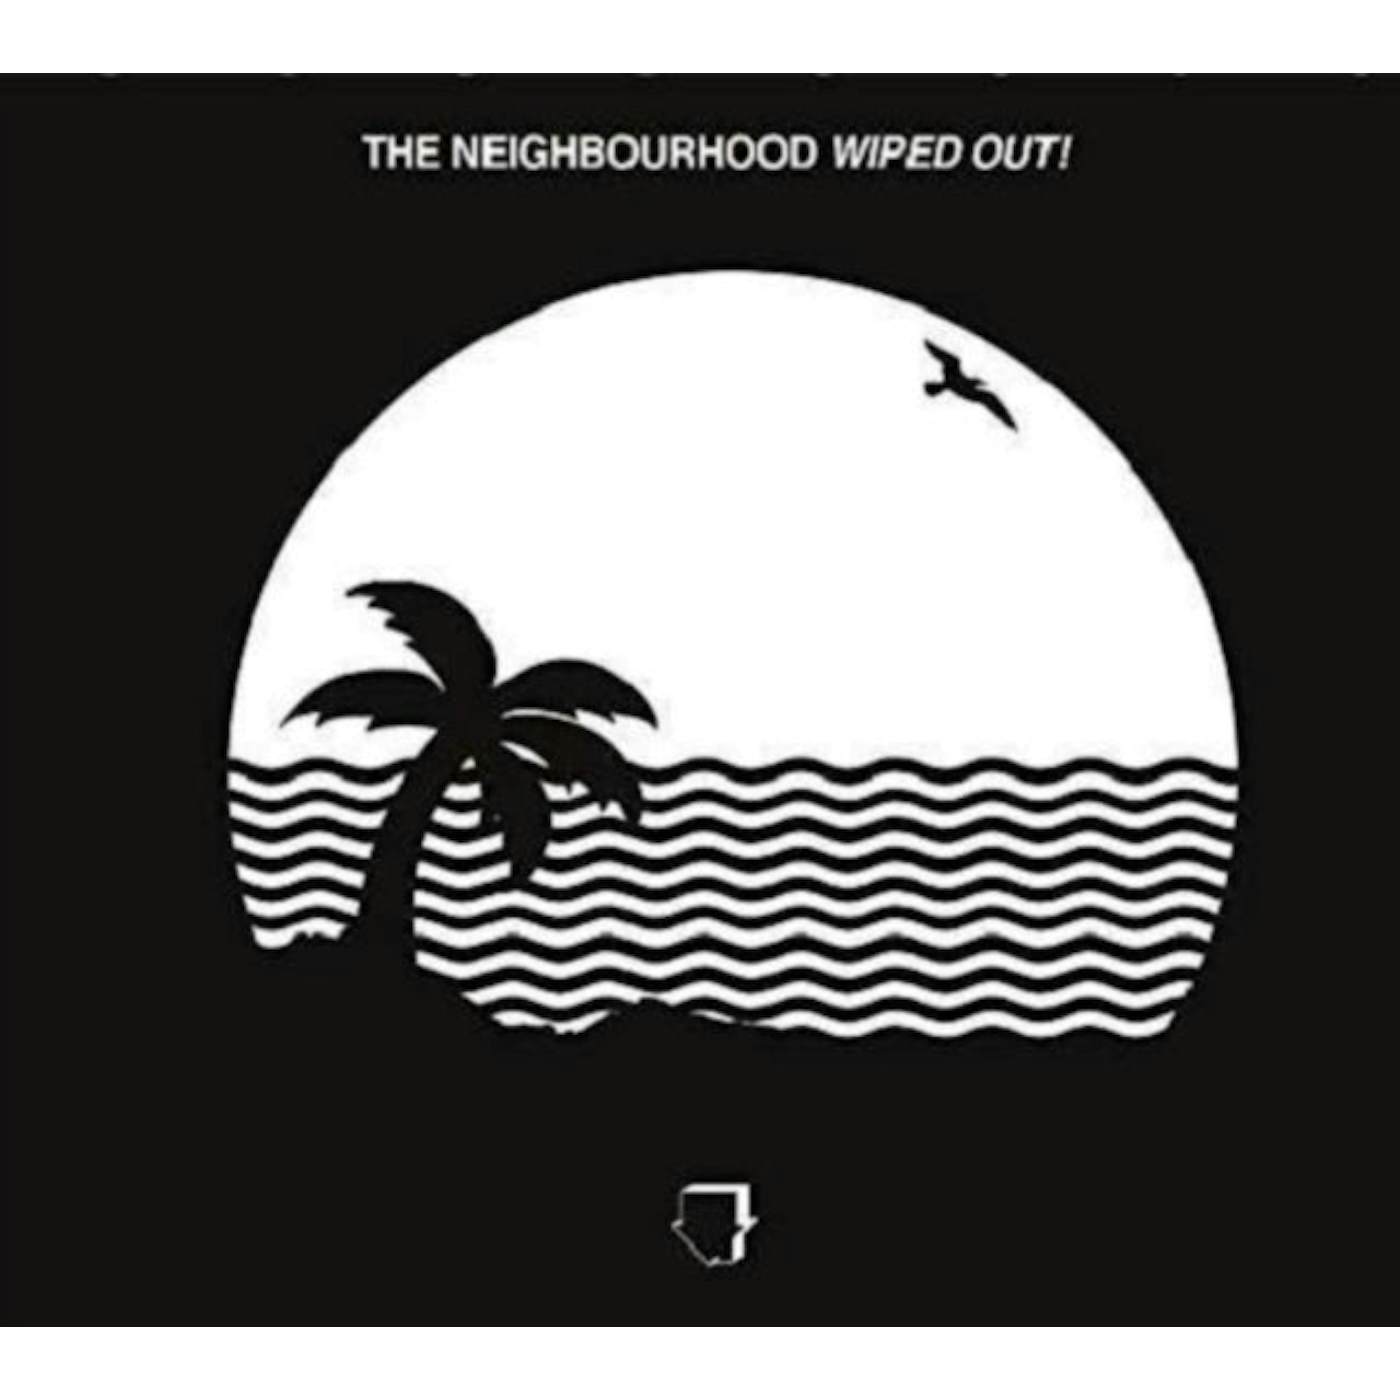 HARD TO IMAGINE THE NEIGHBOURHOOD EVER CHANGING' 3xLP – The Neighbourhood